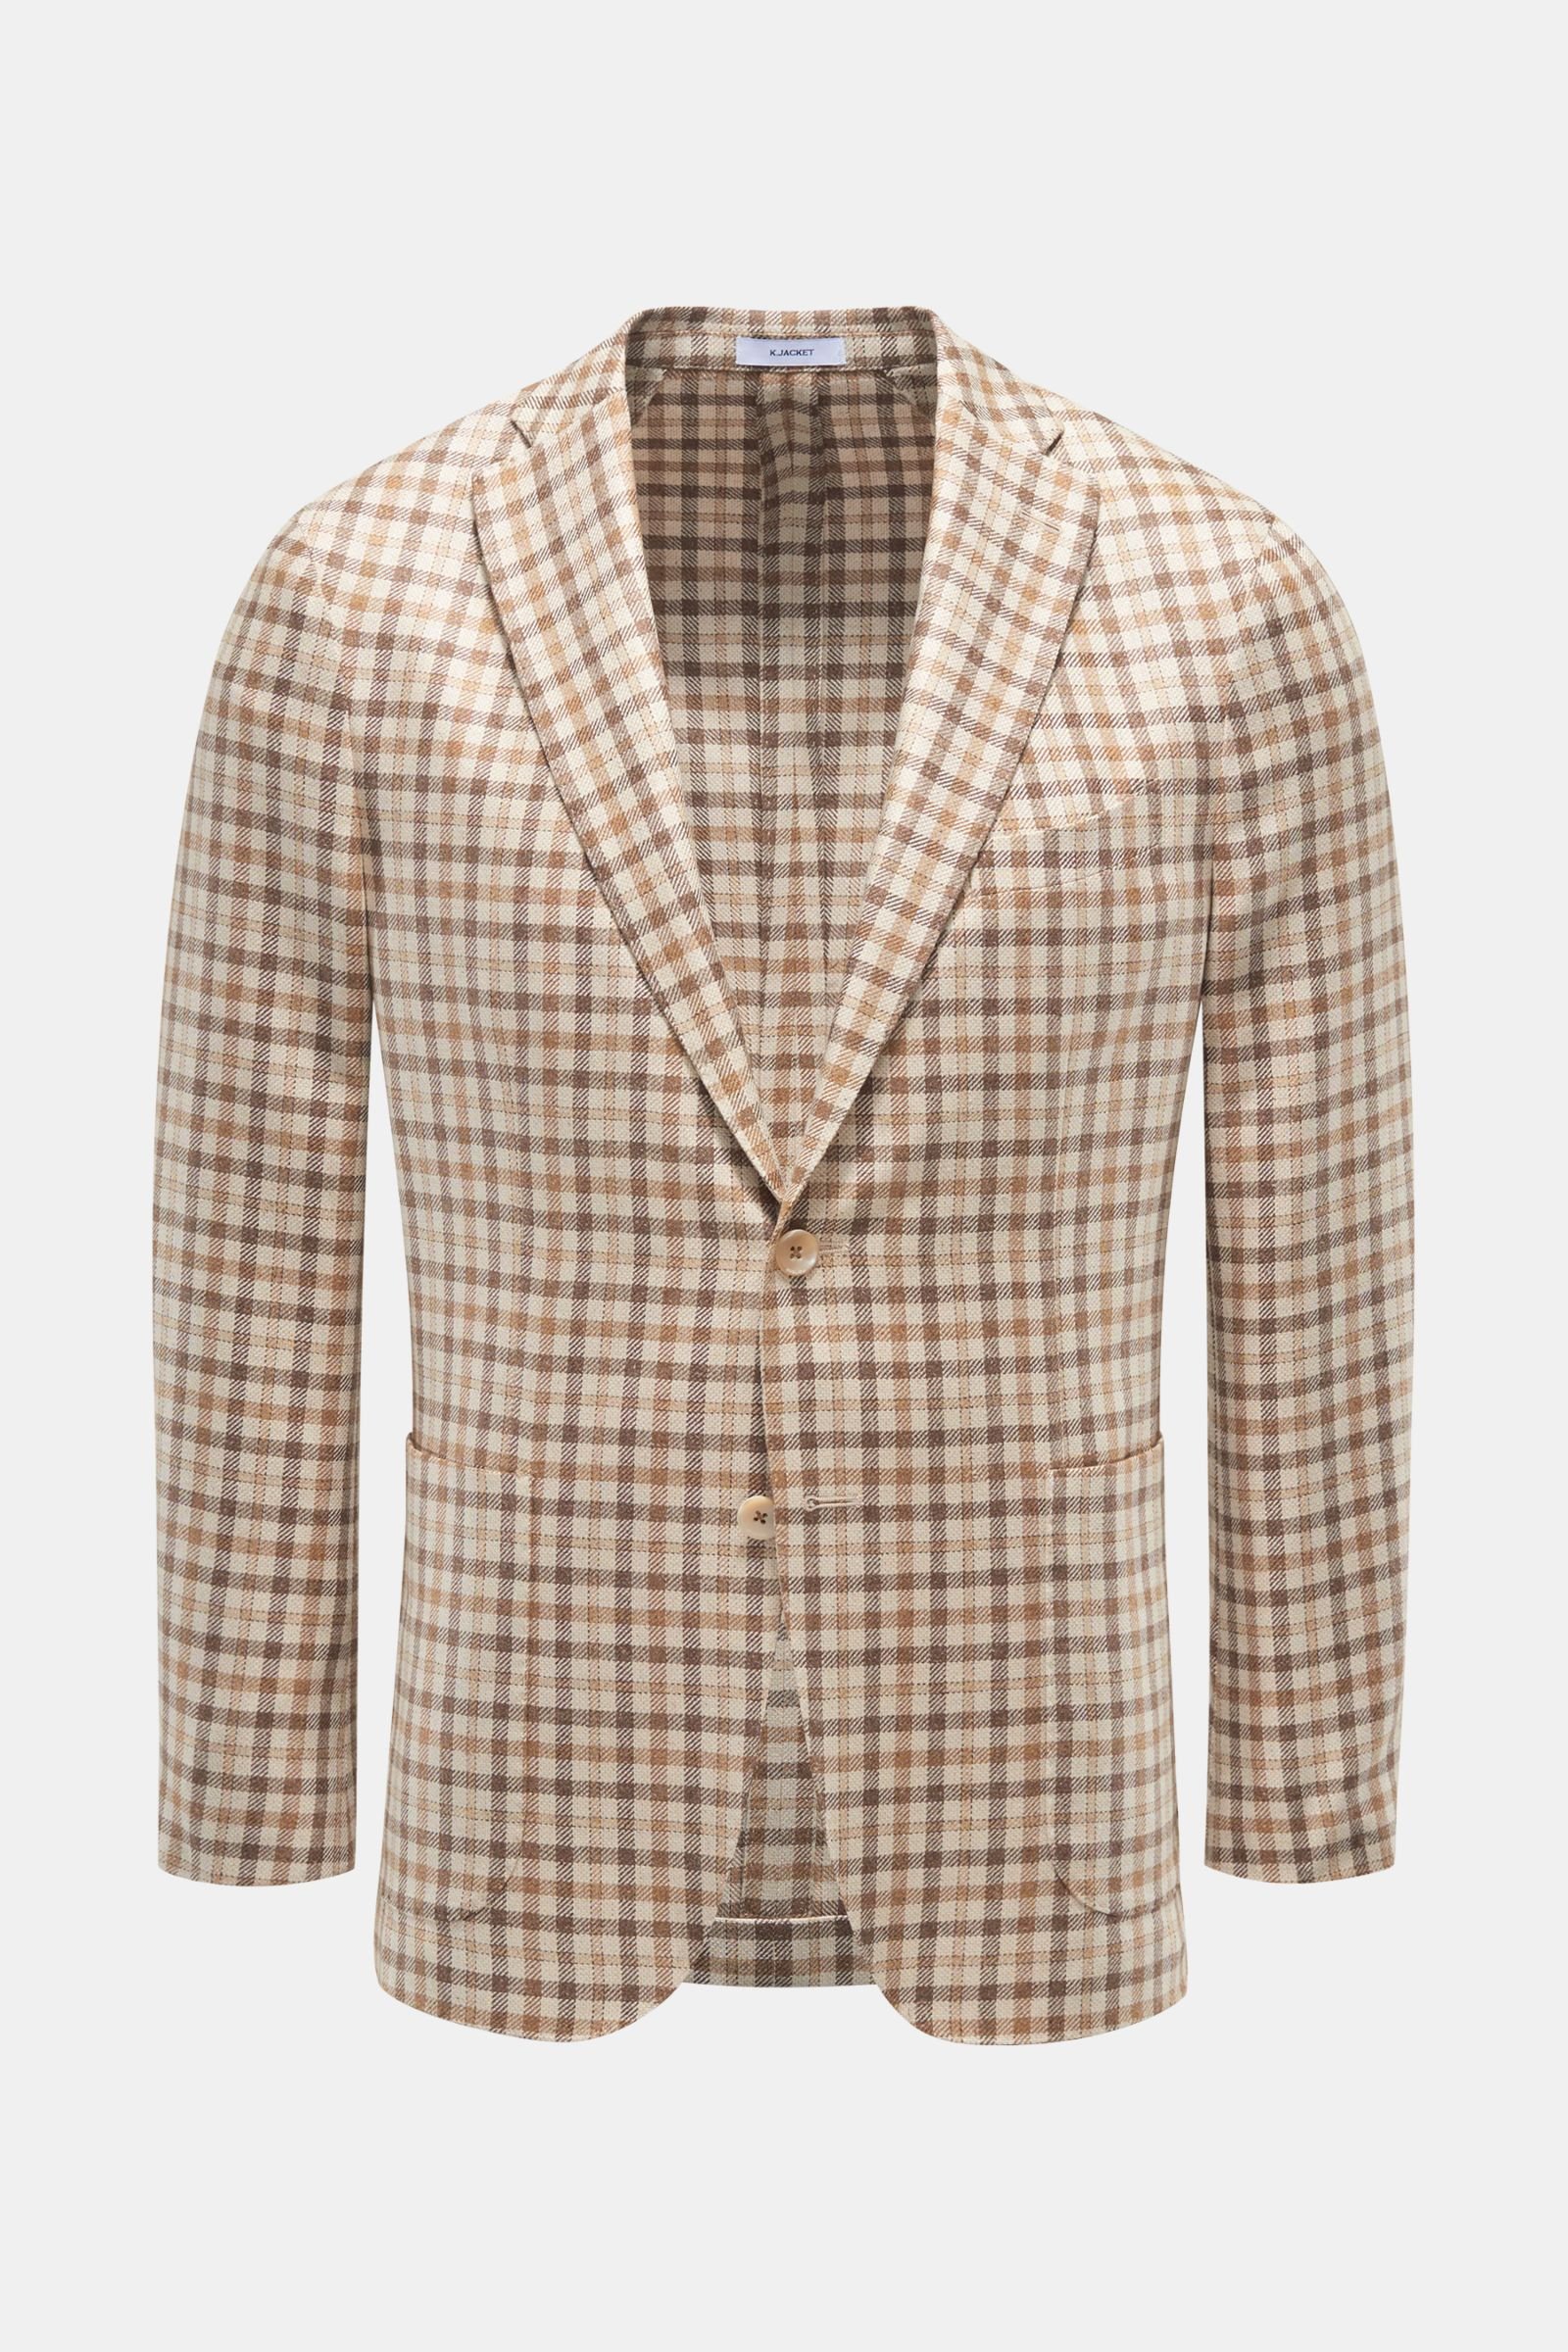 Smart-casual jacket 'K. Jacket' beige/brown checked